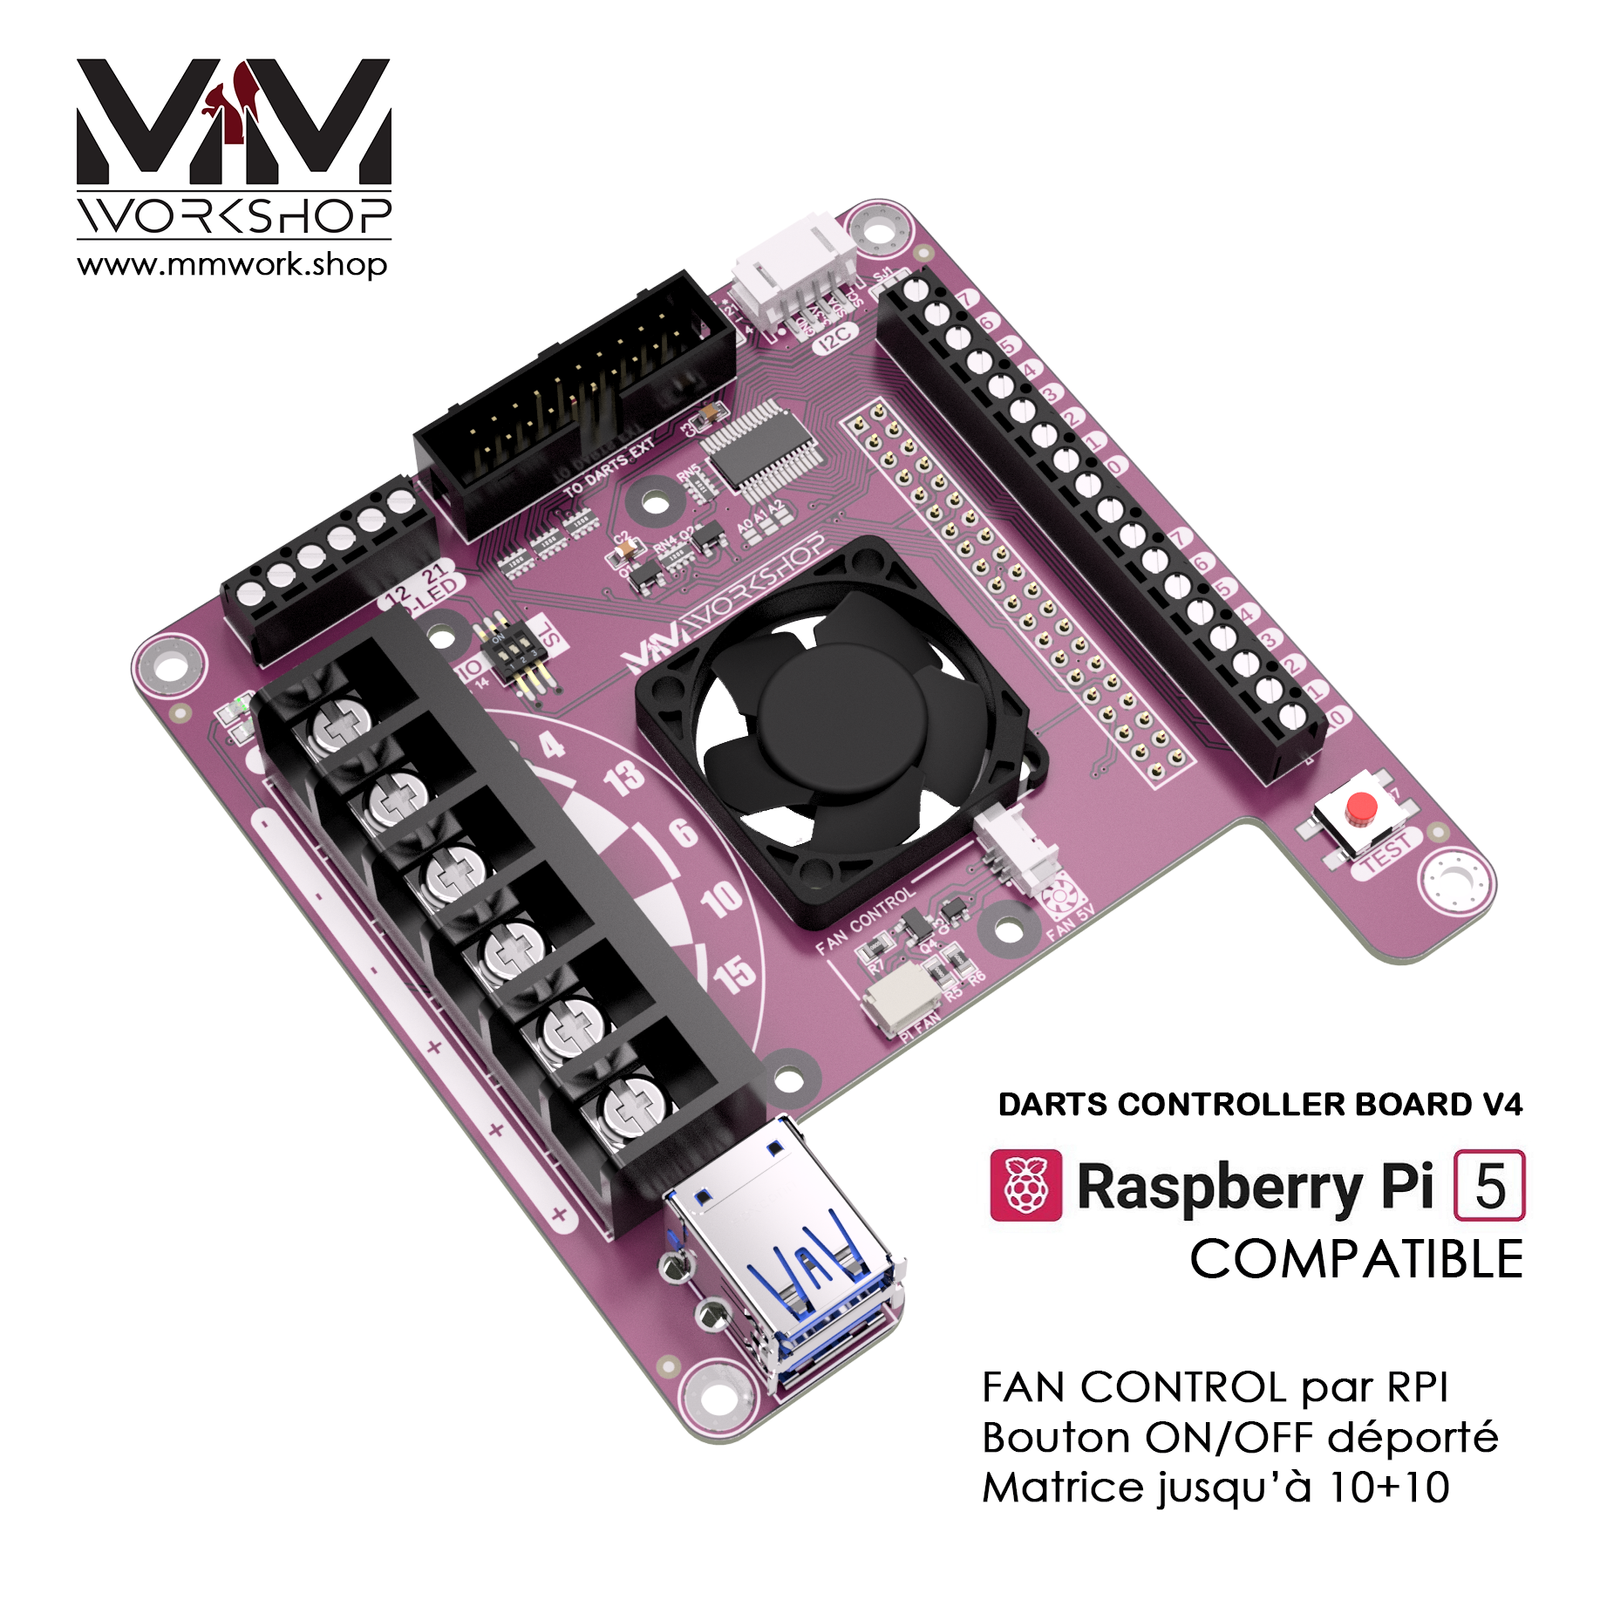 Raspberry Pi 5 Dartscab controller